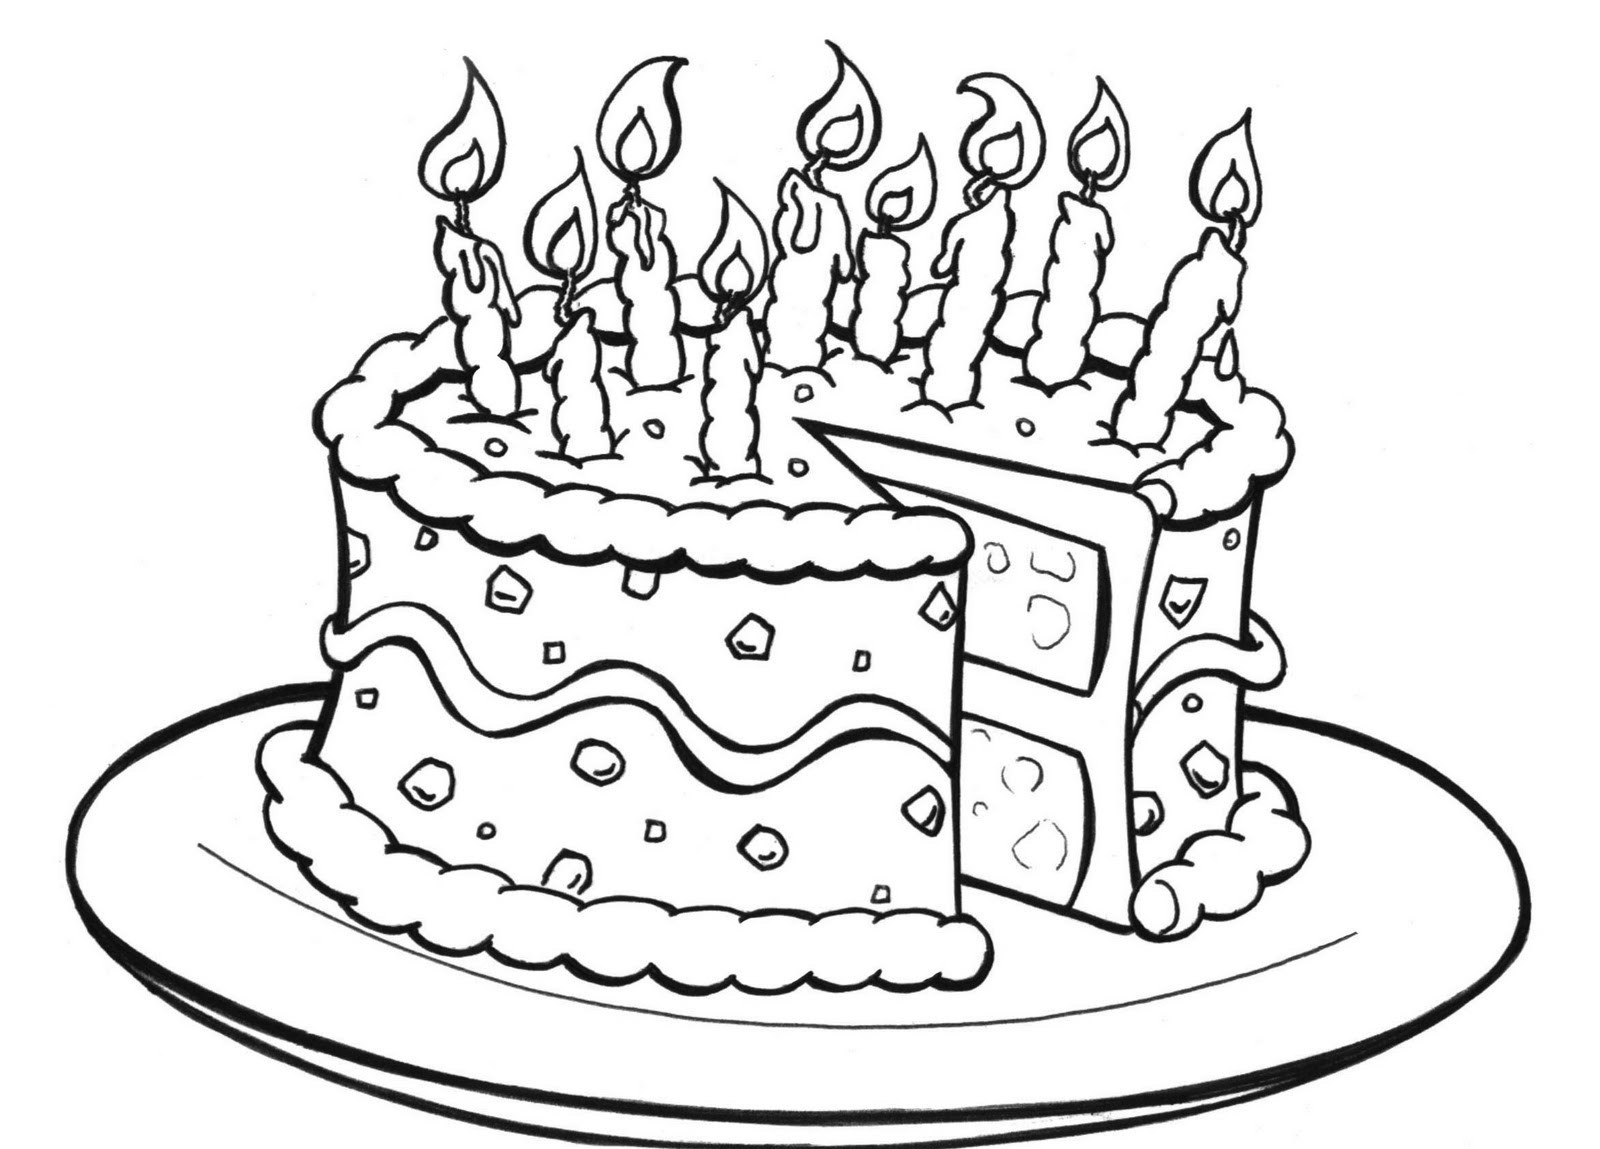 Birthday Cake Coloring Page
 Free Printable Birthday Cake Coloring Pages For Kids